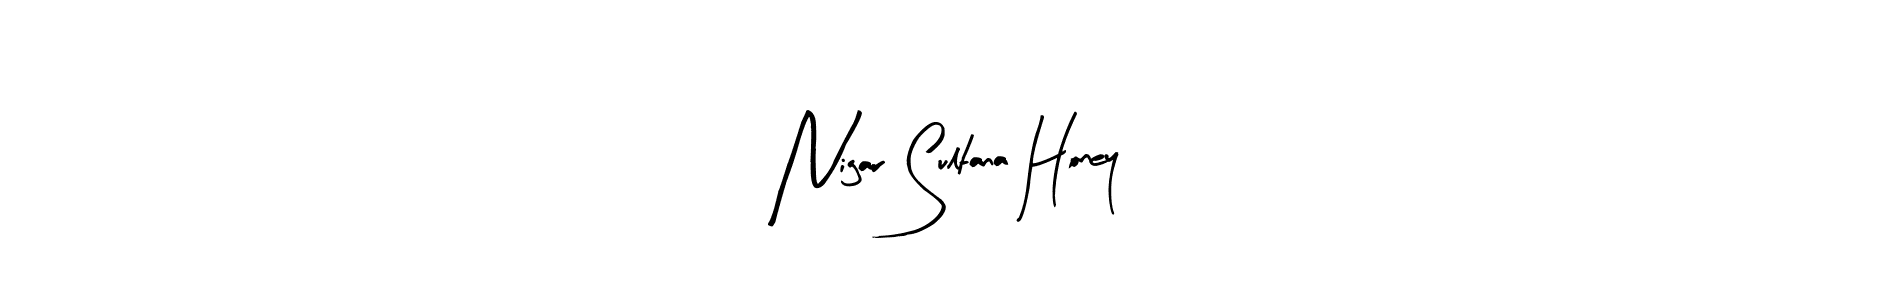 How to Draw Nigar Sultana Honey signature style? Arty Signature is a latest design signature styles for name Nigar Sultana Honey. Nigar Sultana Honey signature style 8 images and pictures png